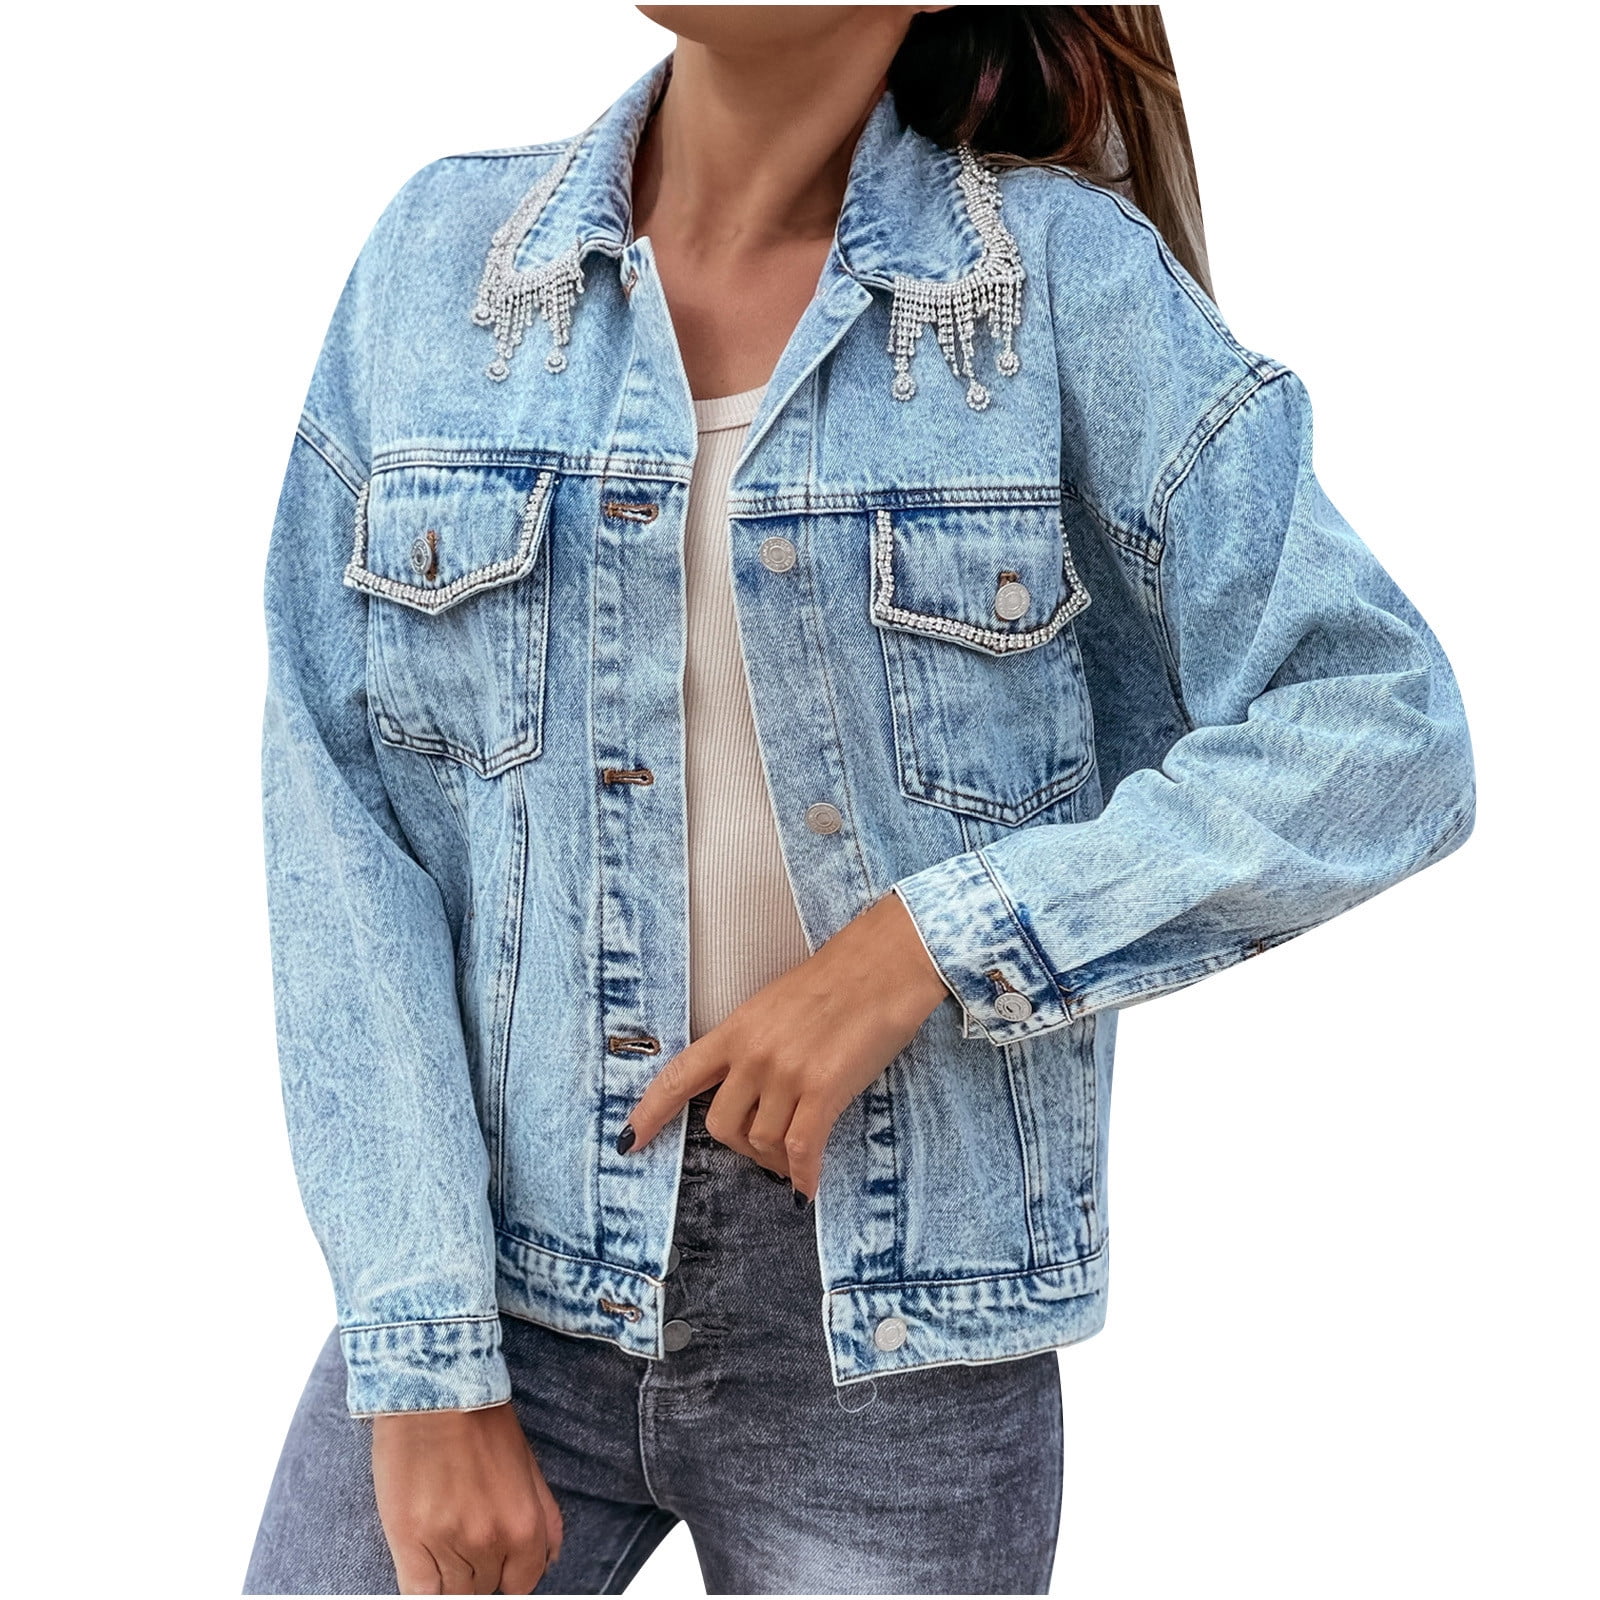 Buy Women's Short Denim Jacket Round Neck Denim Three Quarter Sleeves Light  Blue Jacket (Light Blue, M) at Amazon.in